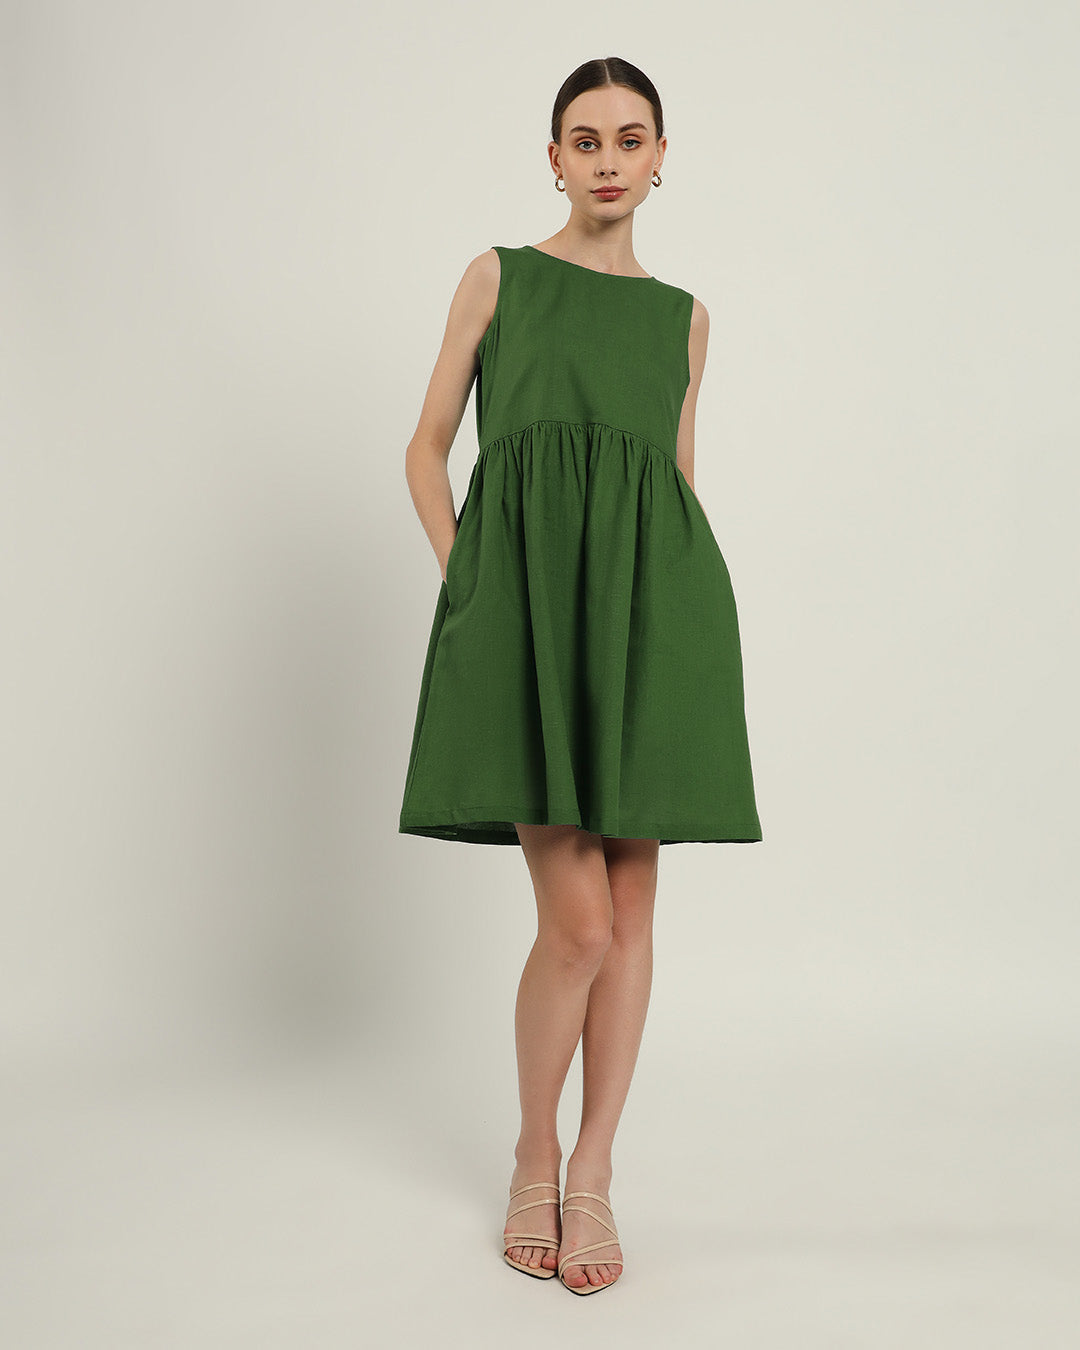 The Chania Emerald Dress